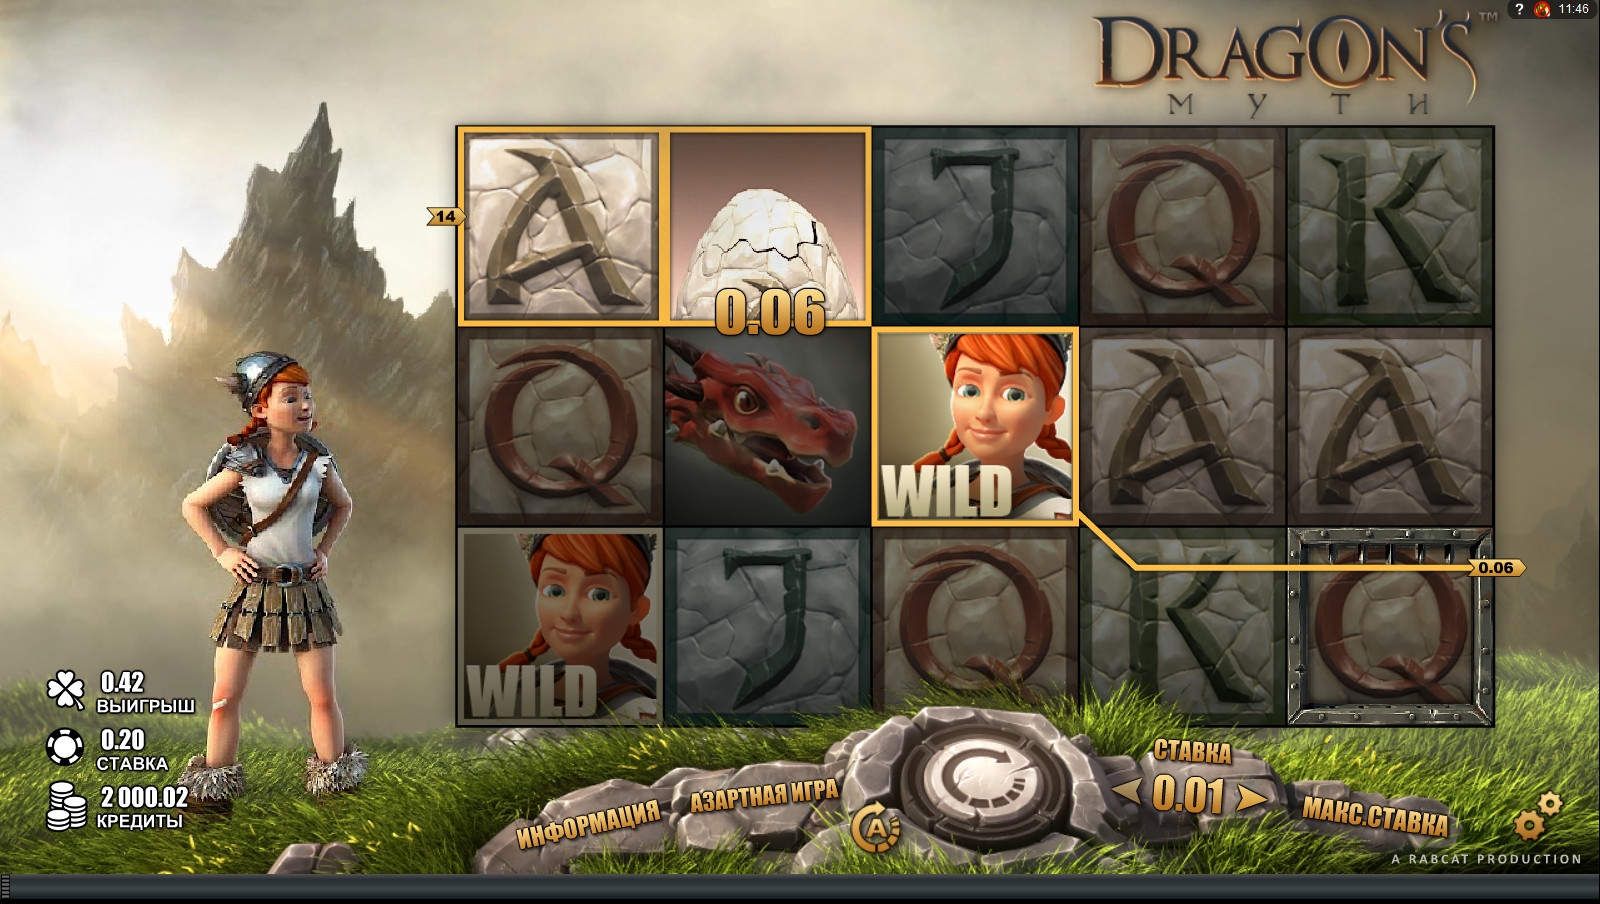 Dragons Myth (Dragons Myth) from category Slots